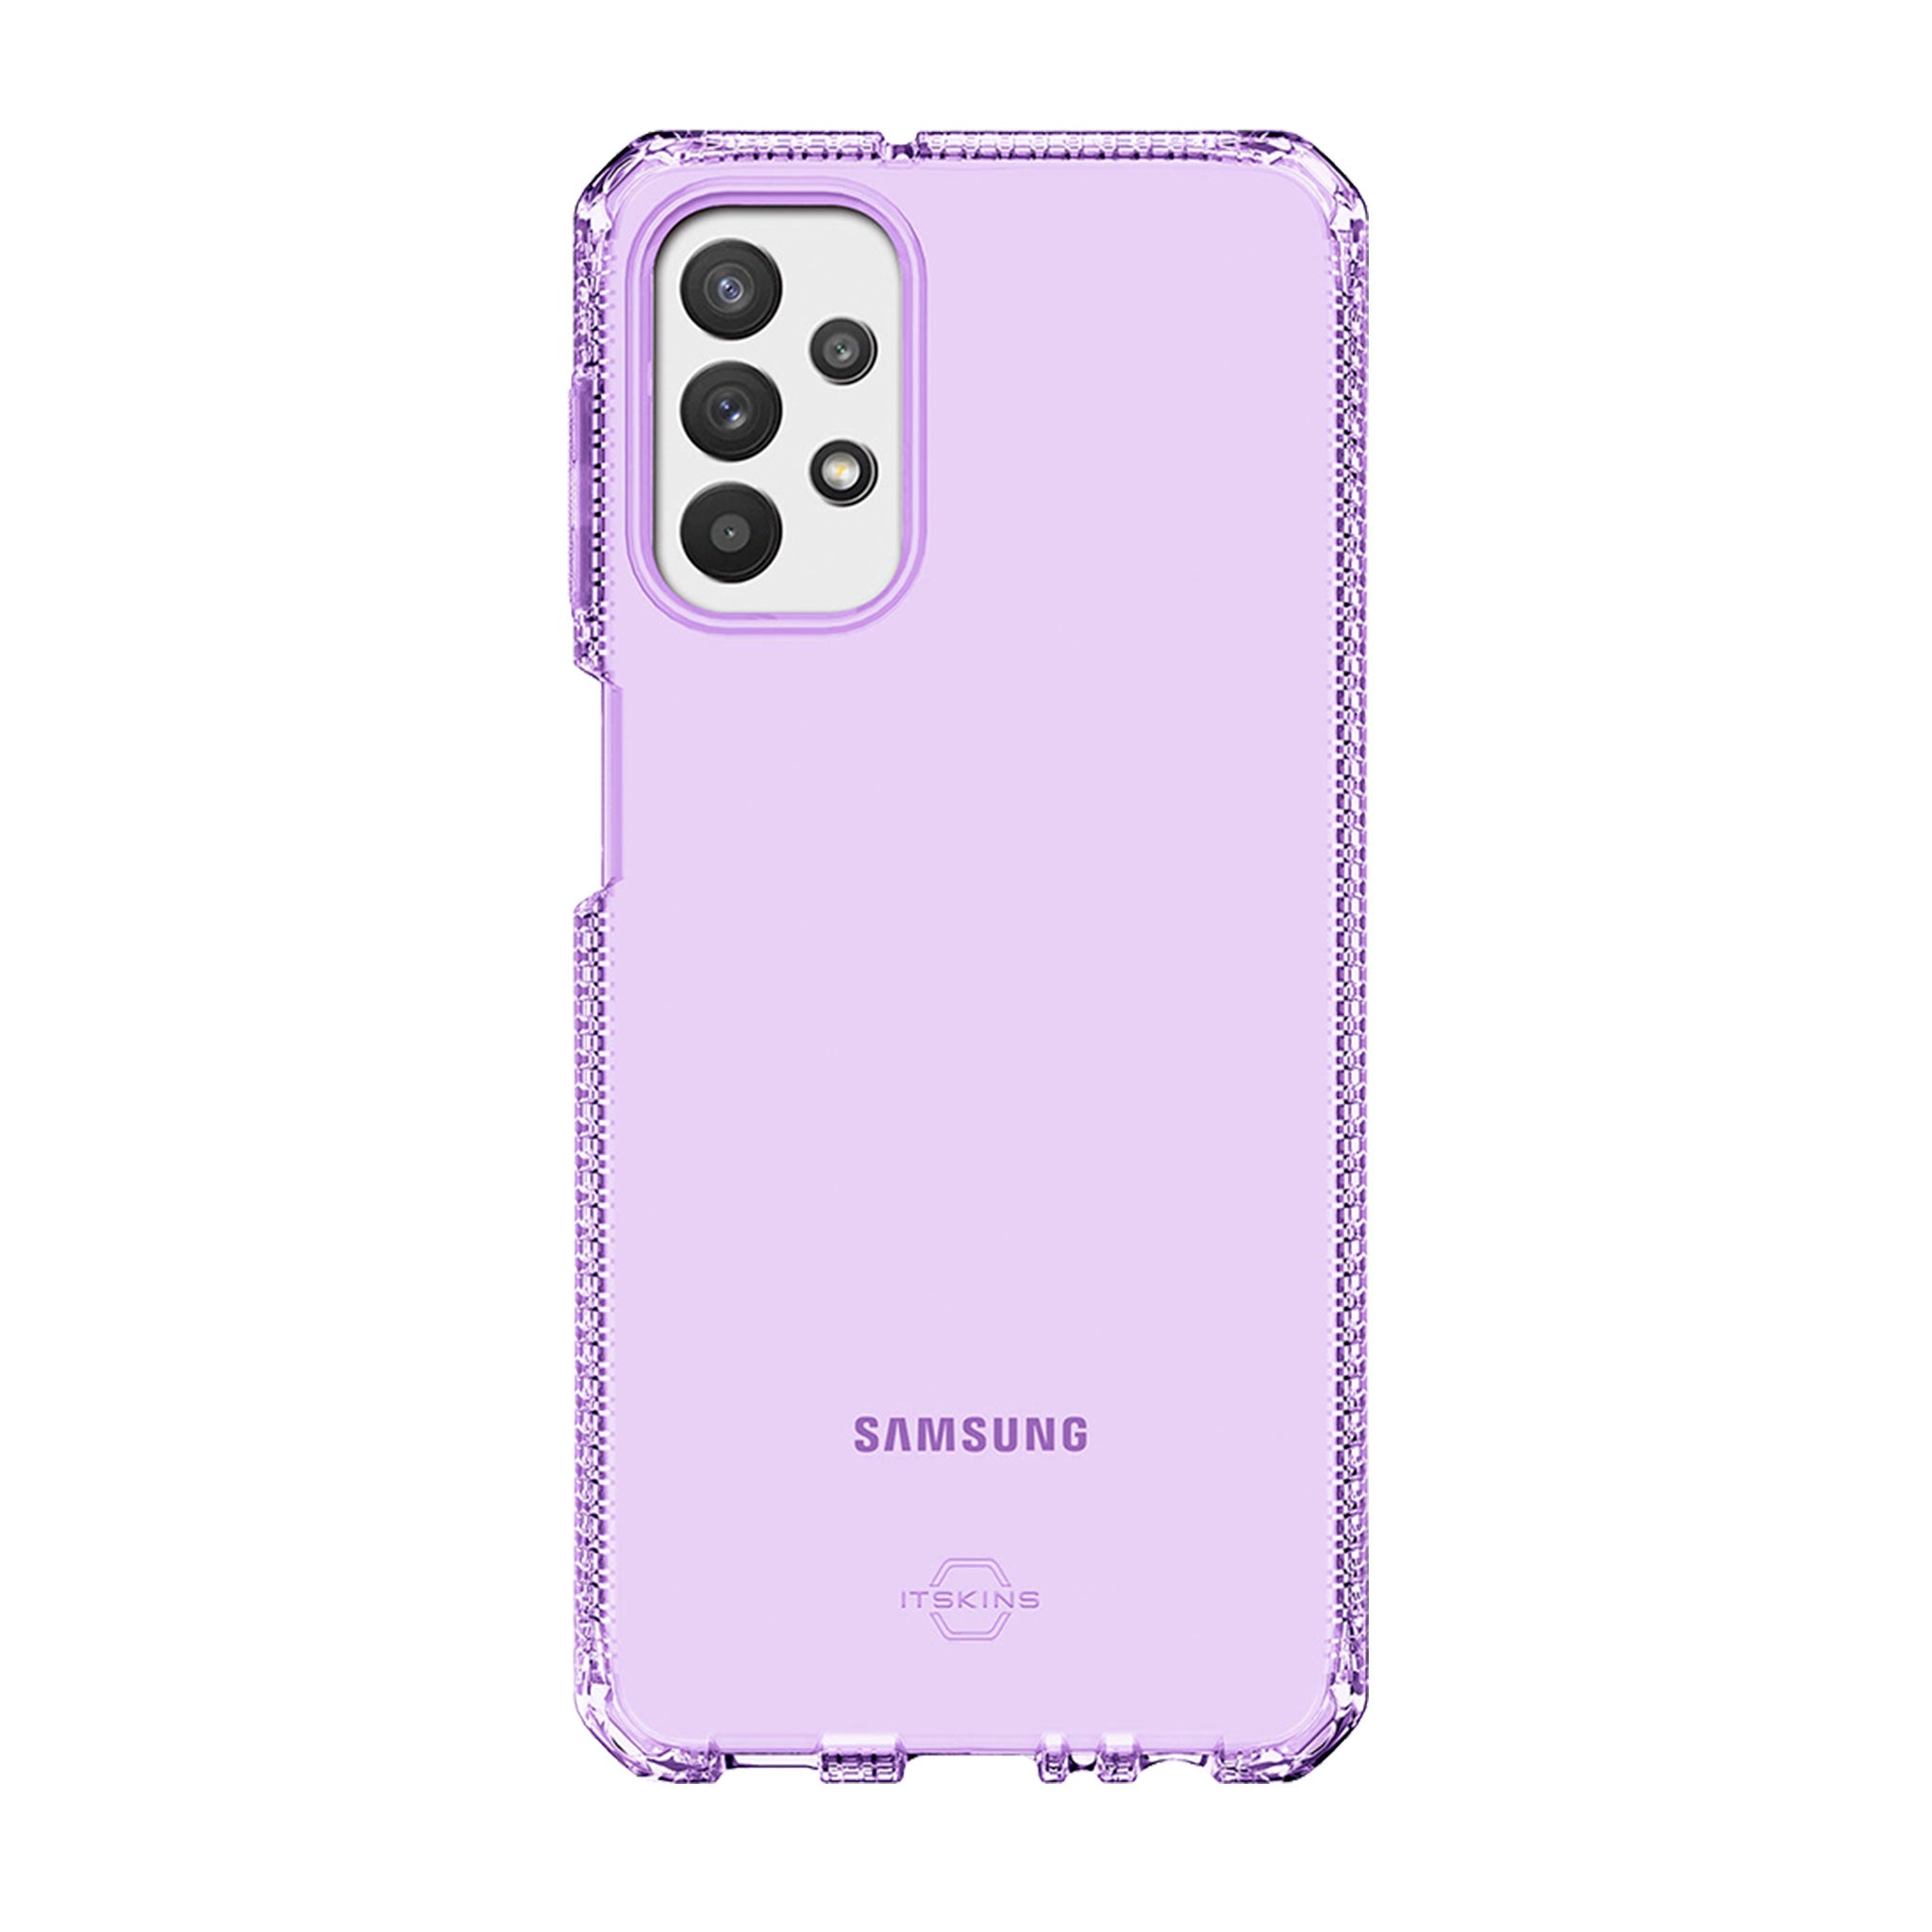 Itskins - Spectrum Clear Case For Samsung Galaxy A32 5g - Purple